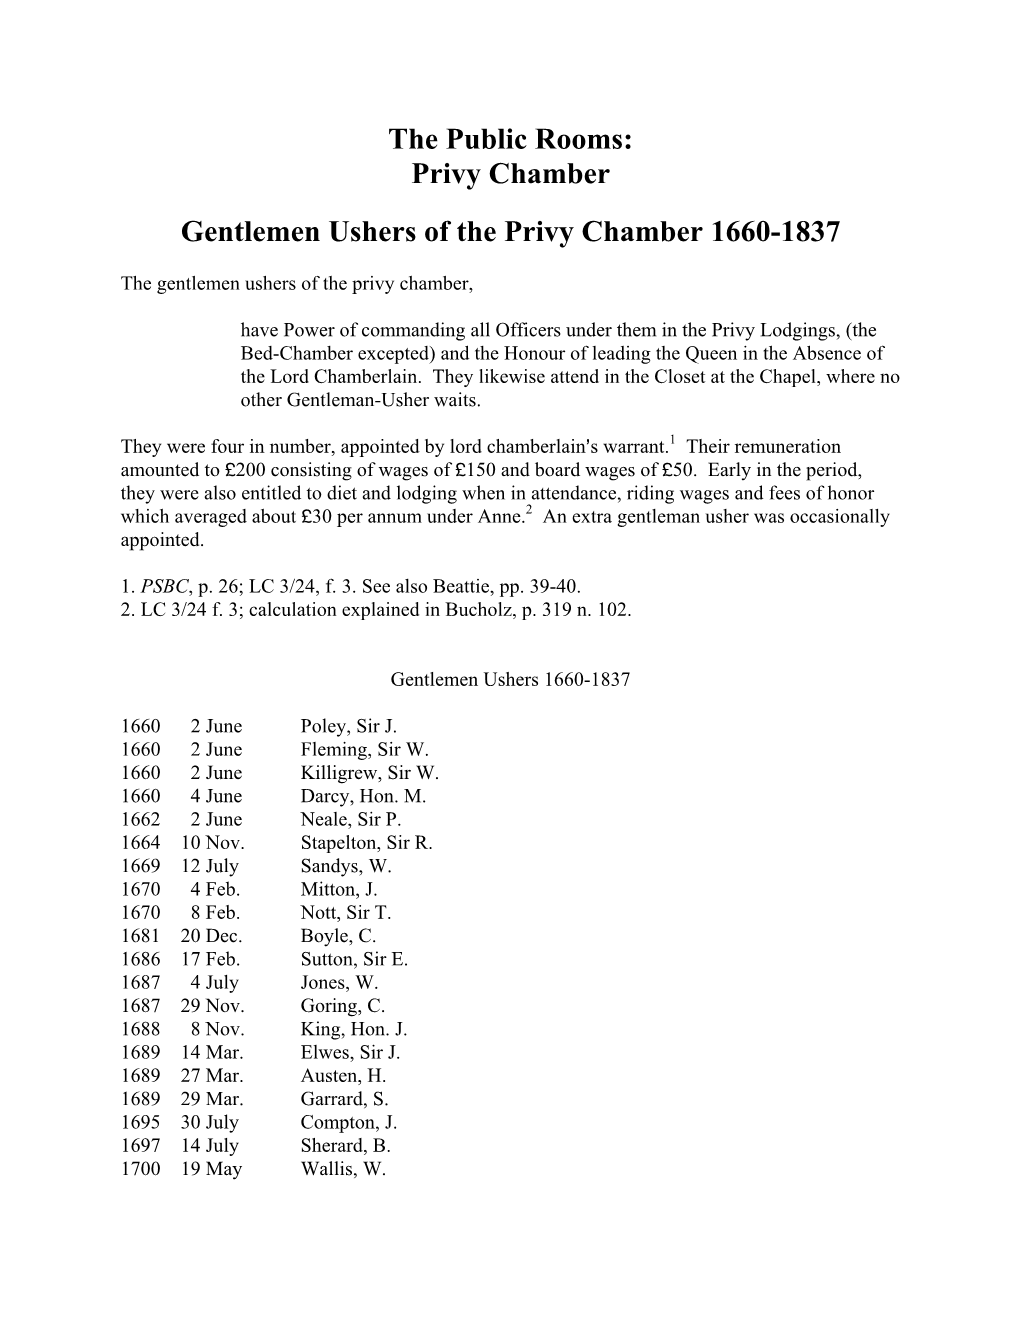 Privy Chamber Gentlemen Ushers of the Privy Chamber 1660-1837